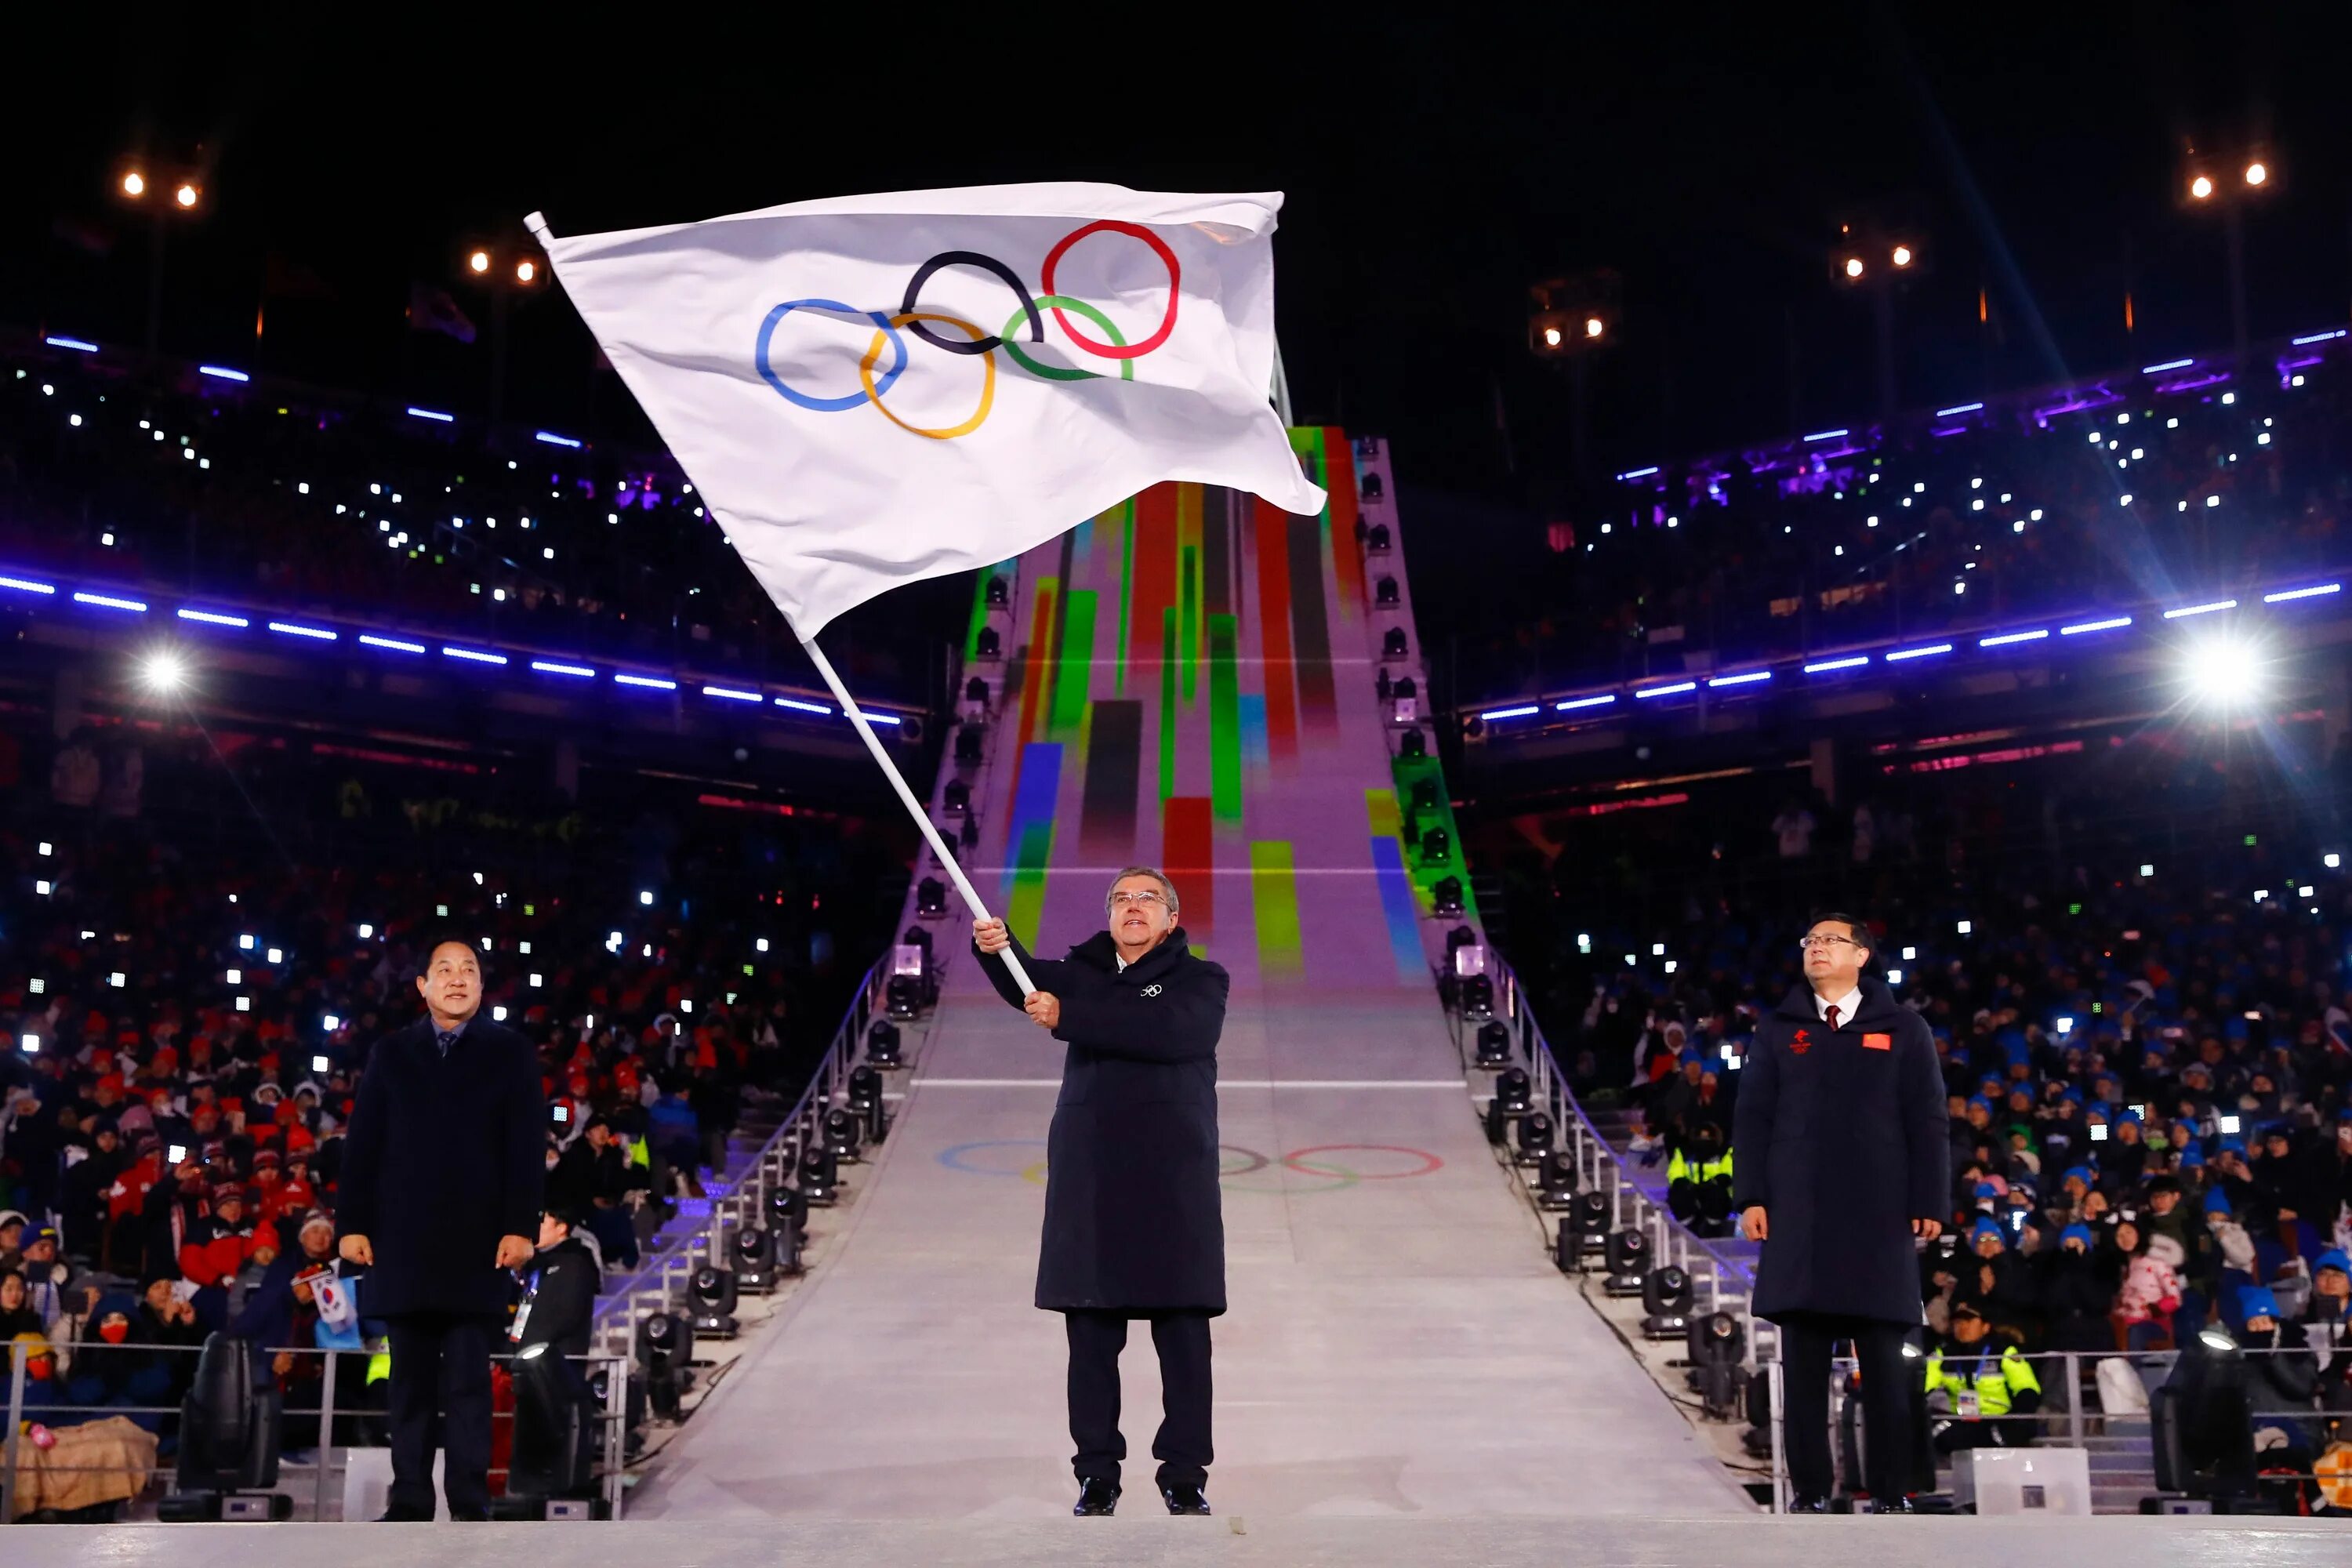 Флаг на церемонии. Закрытие олимпиады 2018. Церемония открытия и закрытия Олимпийских игр с флагом.